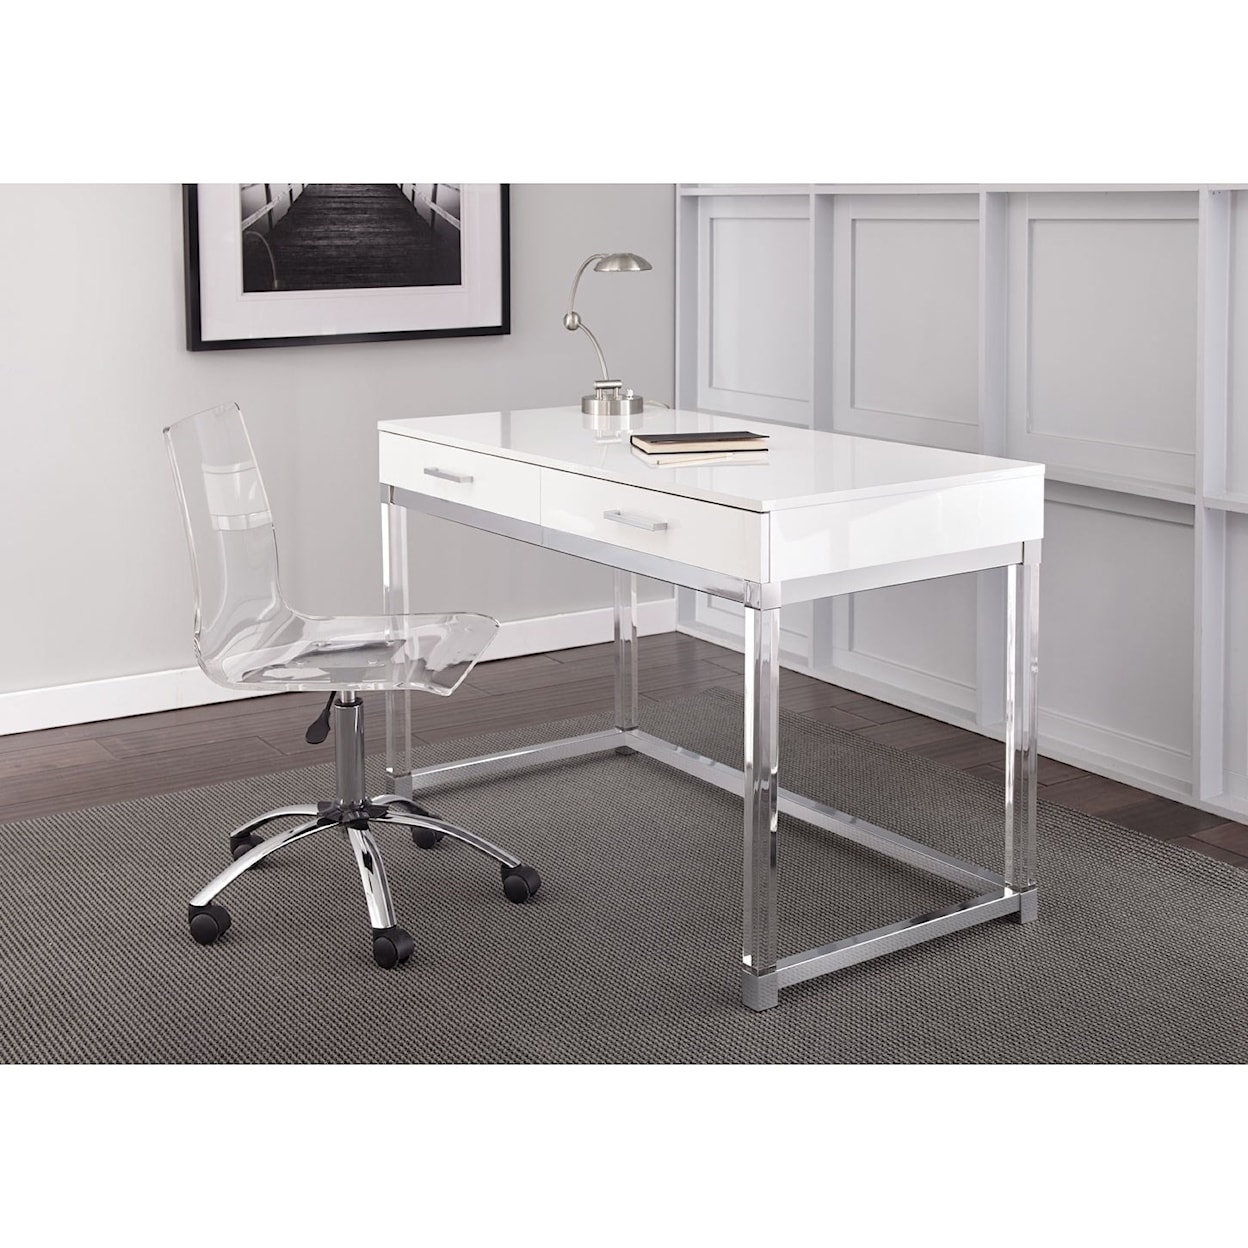 Prime Everett Chrome and Acrylic Desk and Chair Set